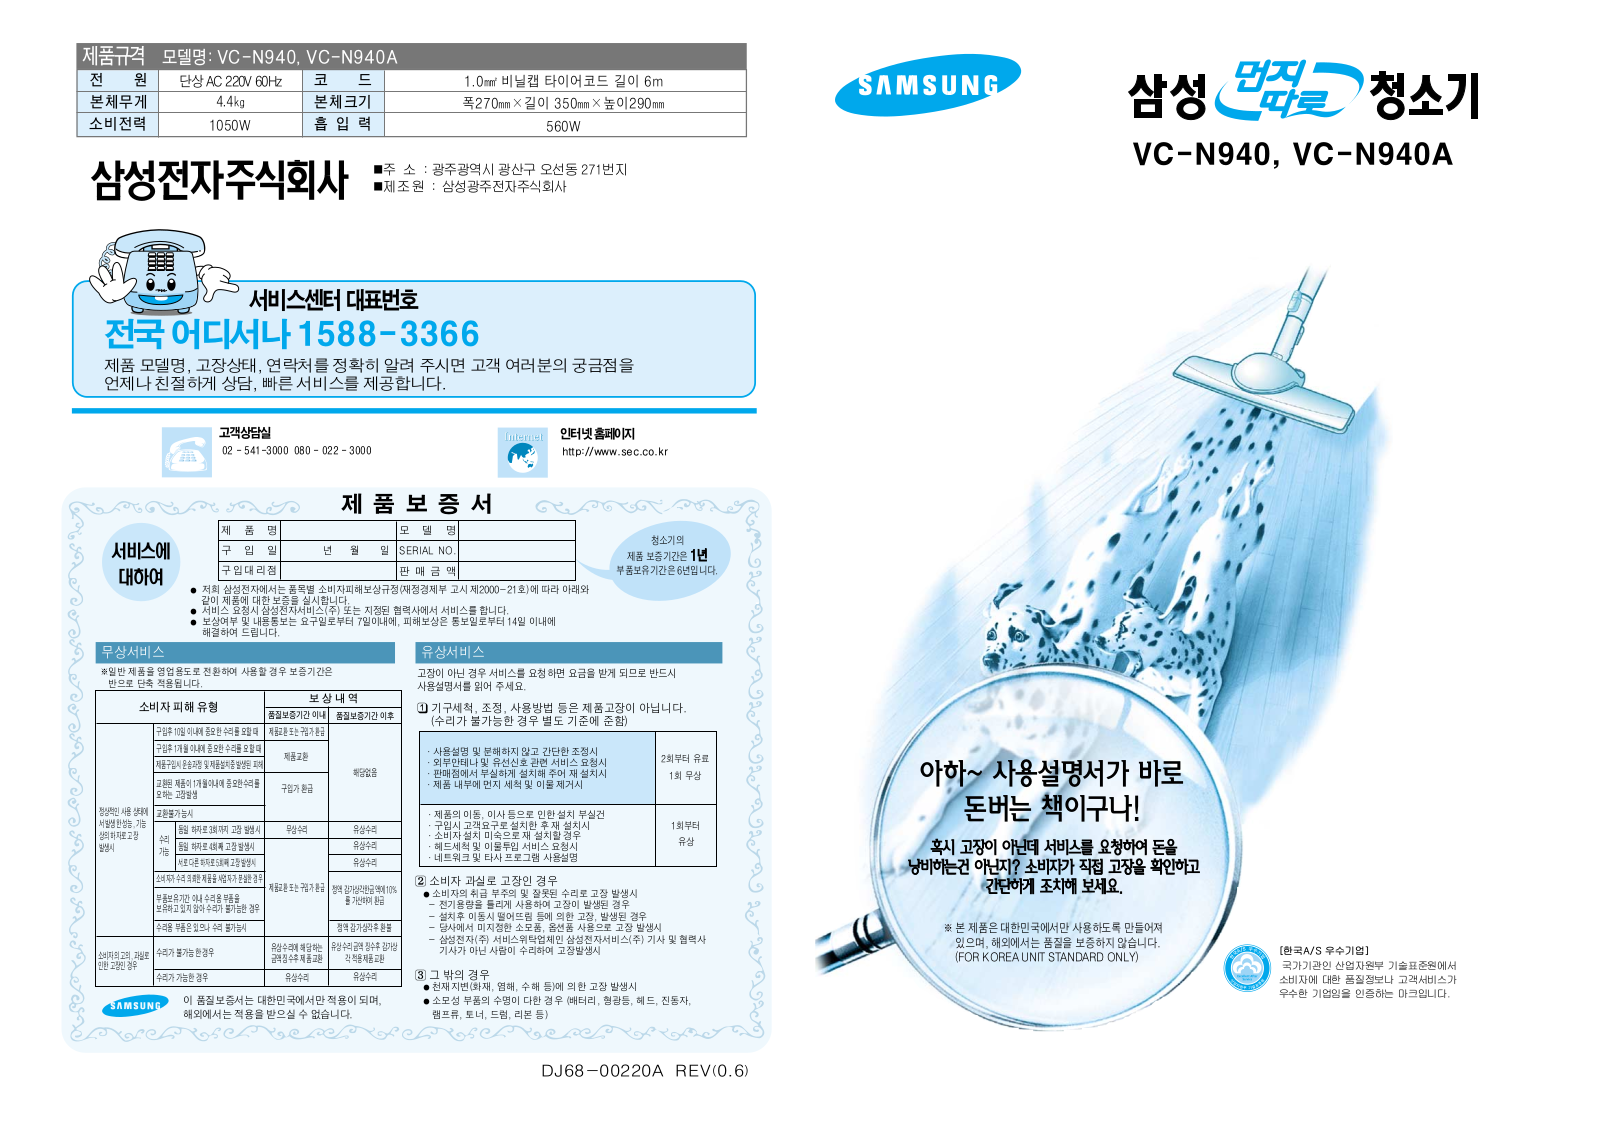 Samsung VC-N940A, VC-N940 User Manual